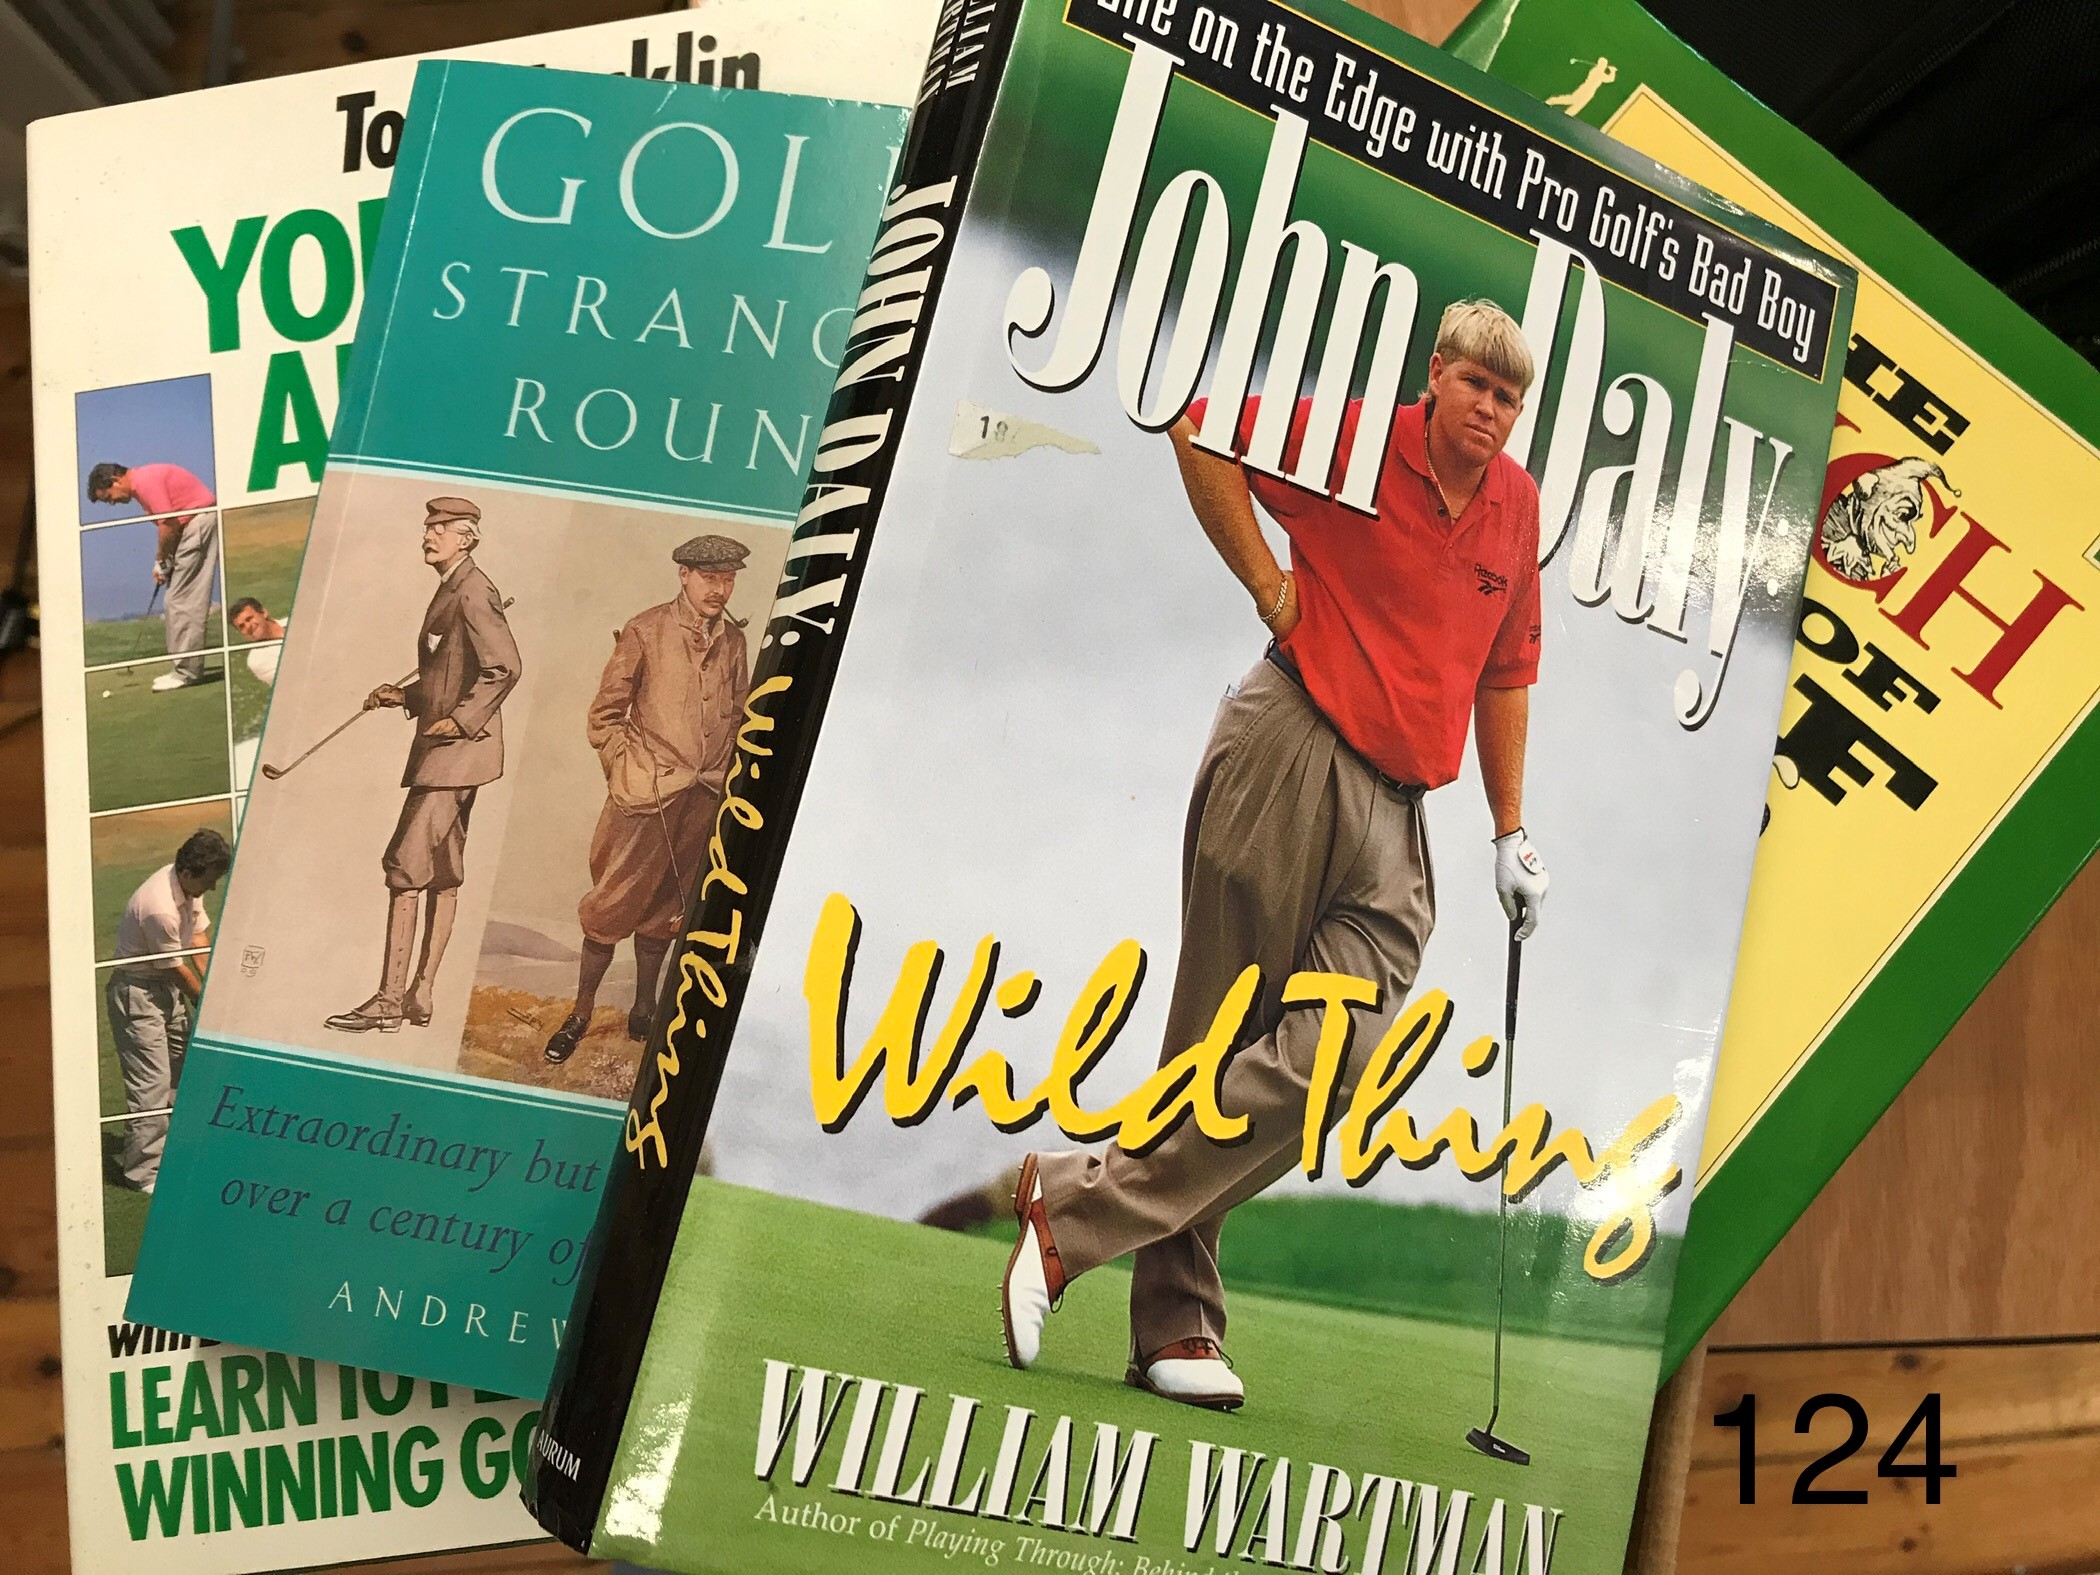 BOOKS: GOLF 11 x Golfing books including Tony Jacklin 'Your Game and Mine', 'Golf's Strangest